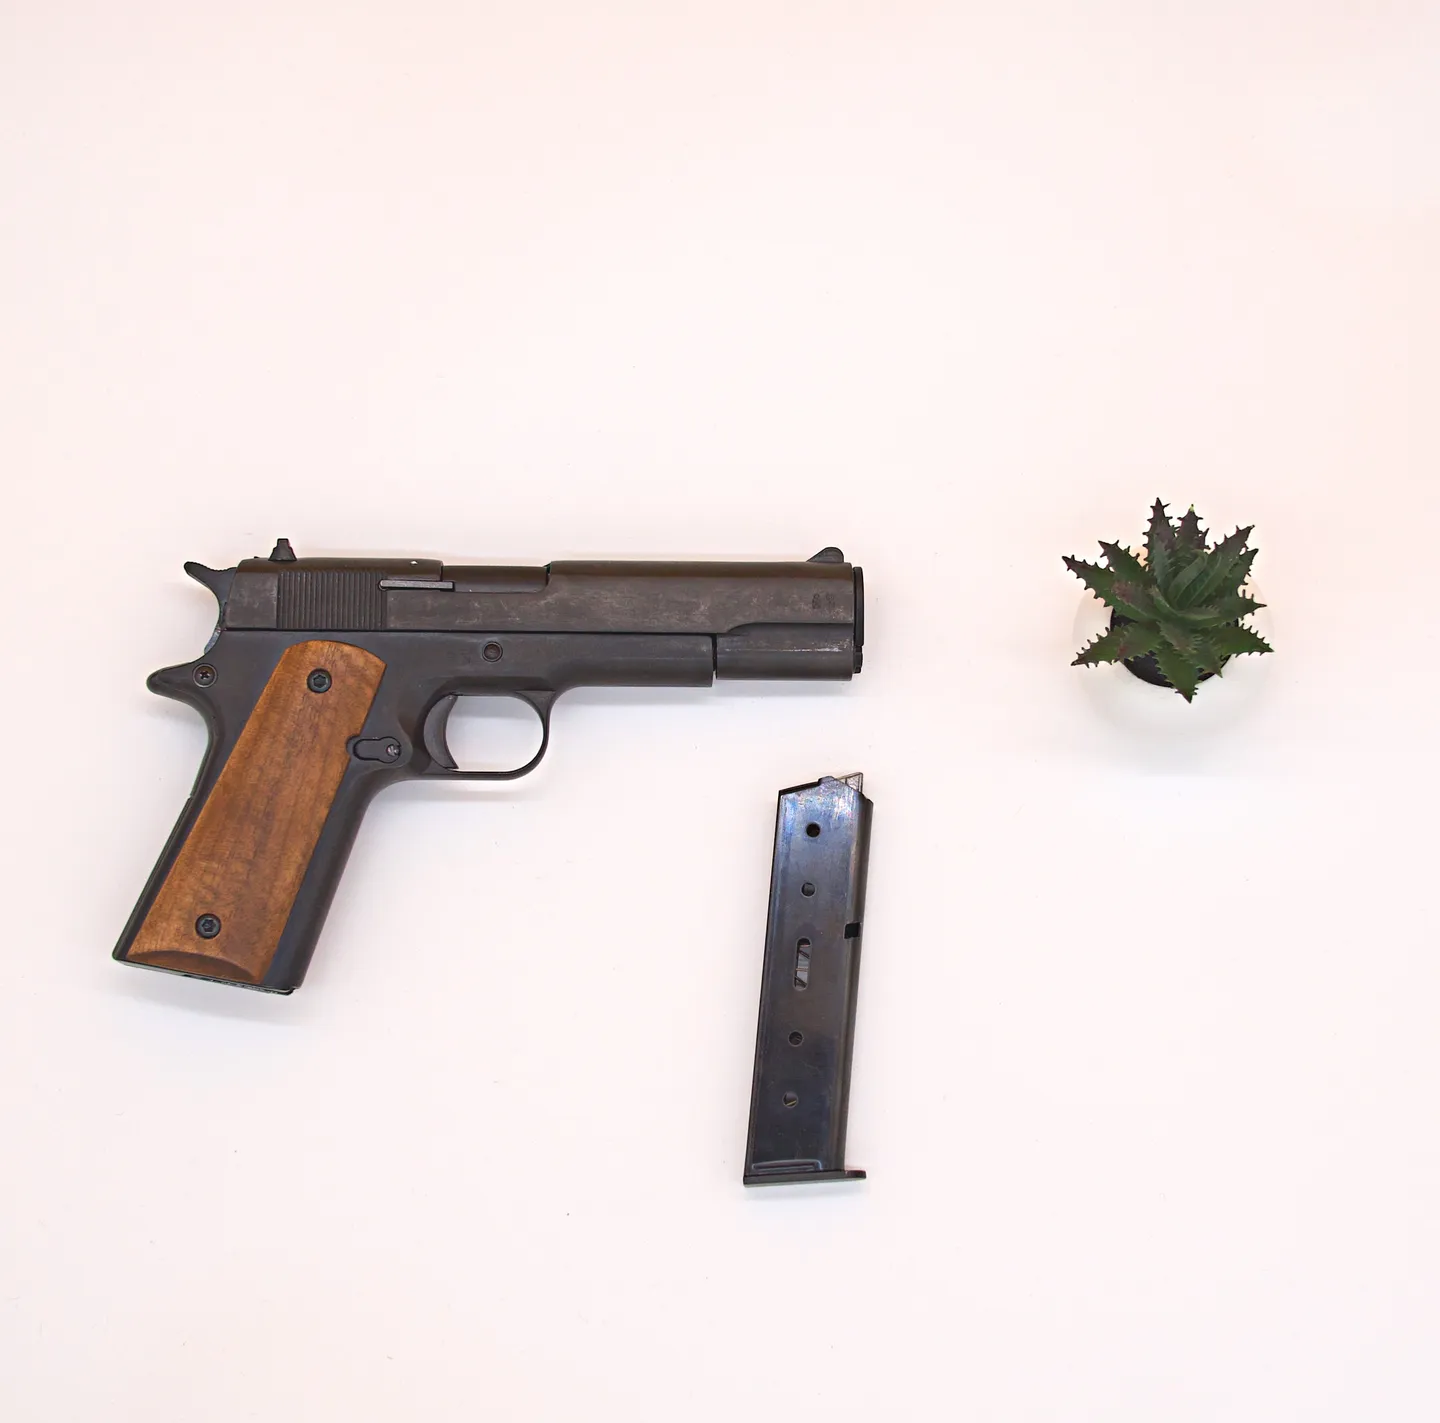 Pistola di allarme e difesa - Pistola d'allarme e difesa Kimar 911 9mm PAK – stile Colt 1911